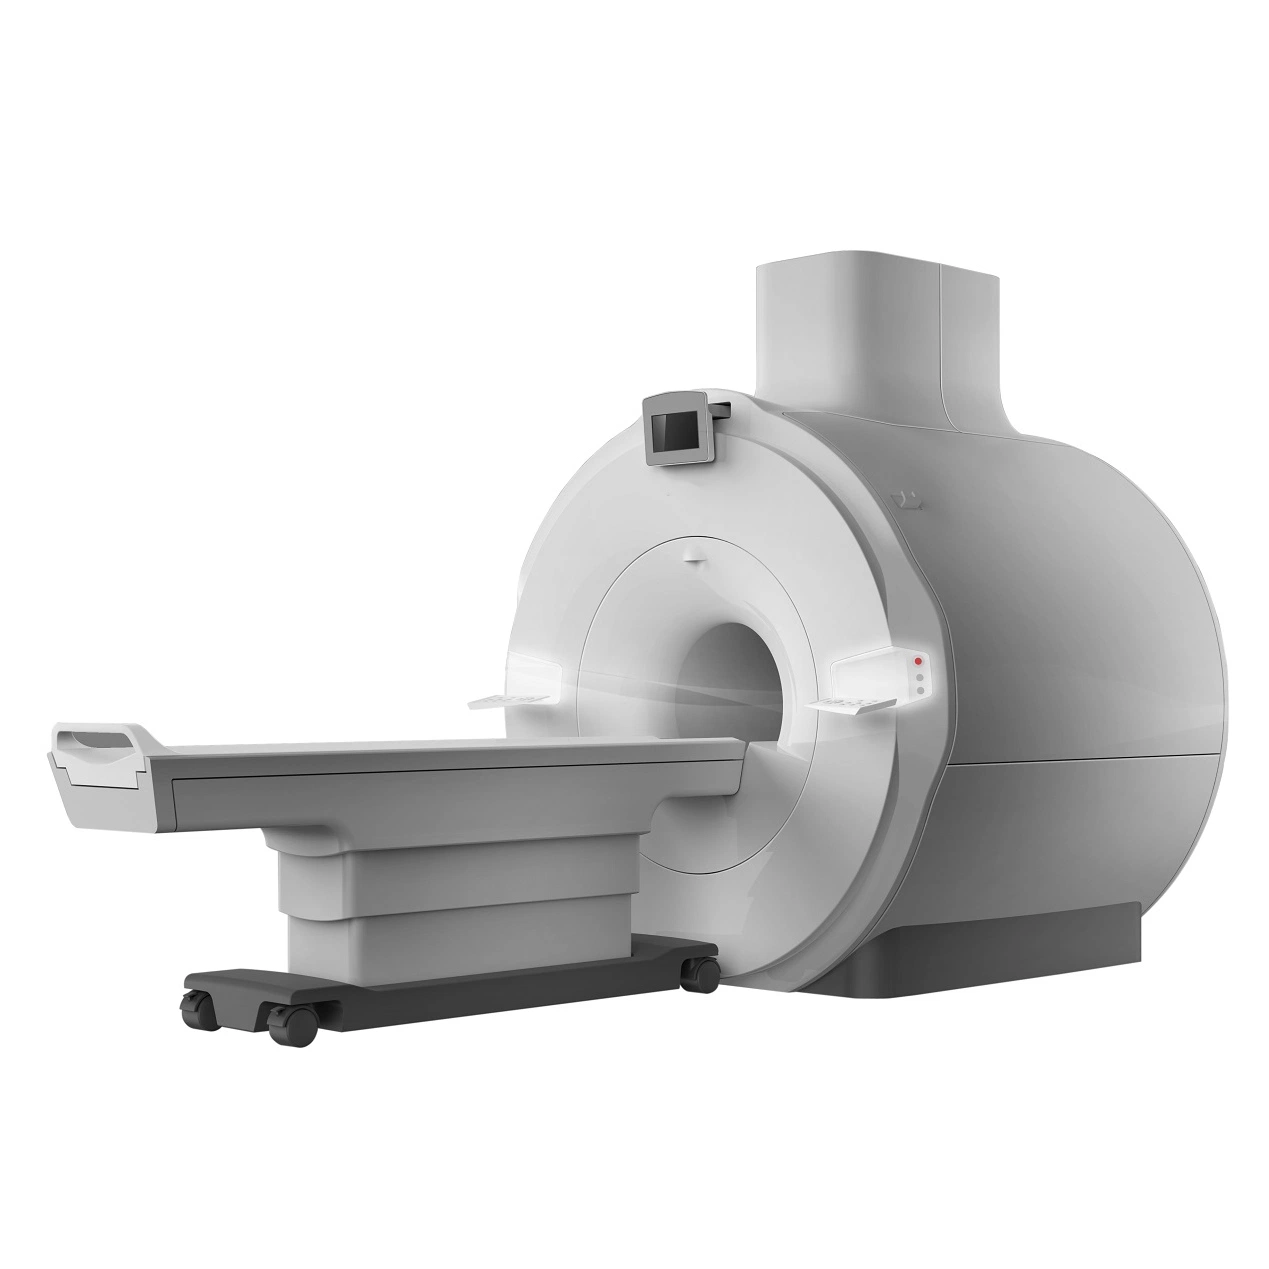 Syp Hospital Medical 0.5t 1.5t 3t MRI Scanner/Scan/Machine Equipment Price with MRI Film